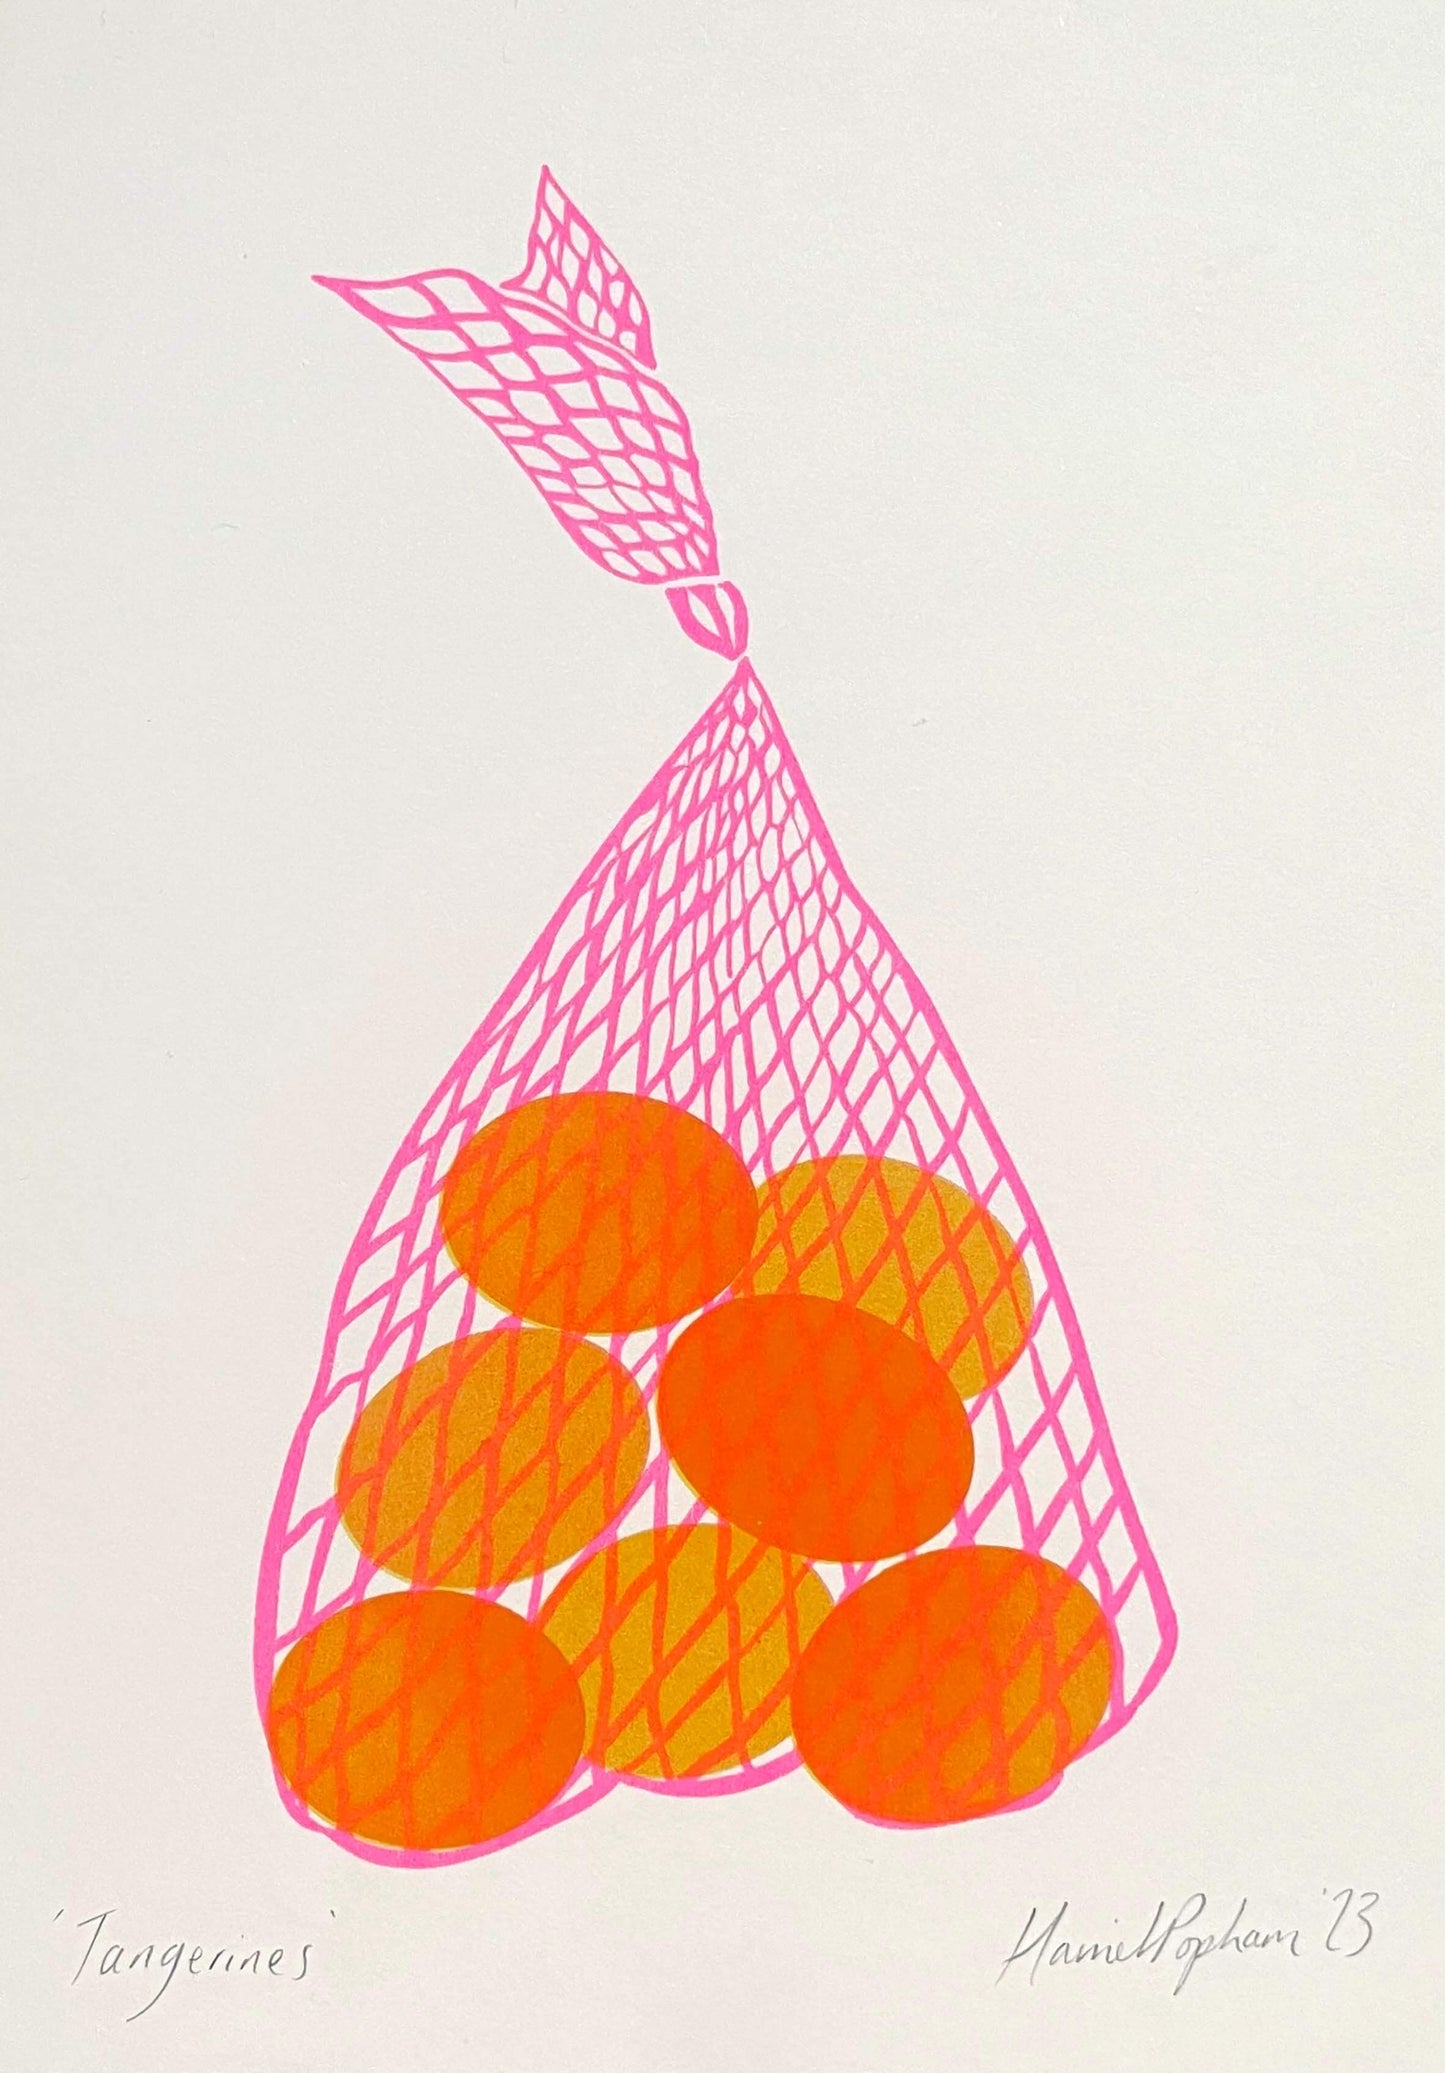 Harriet Popham Tangerines - A5 Riso Print on Tree Free Paper